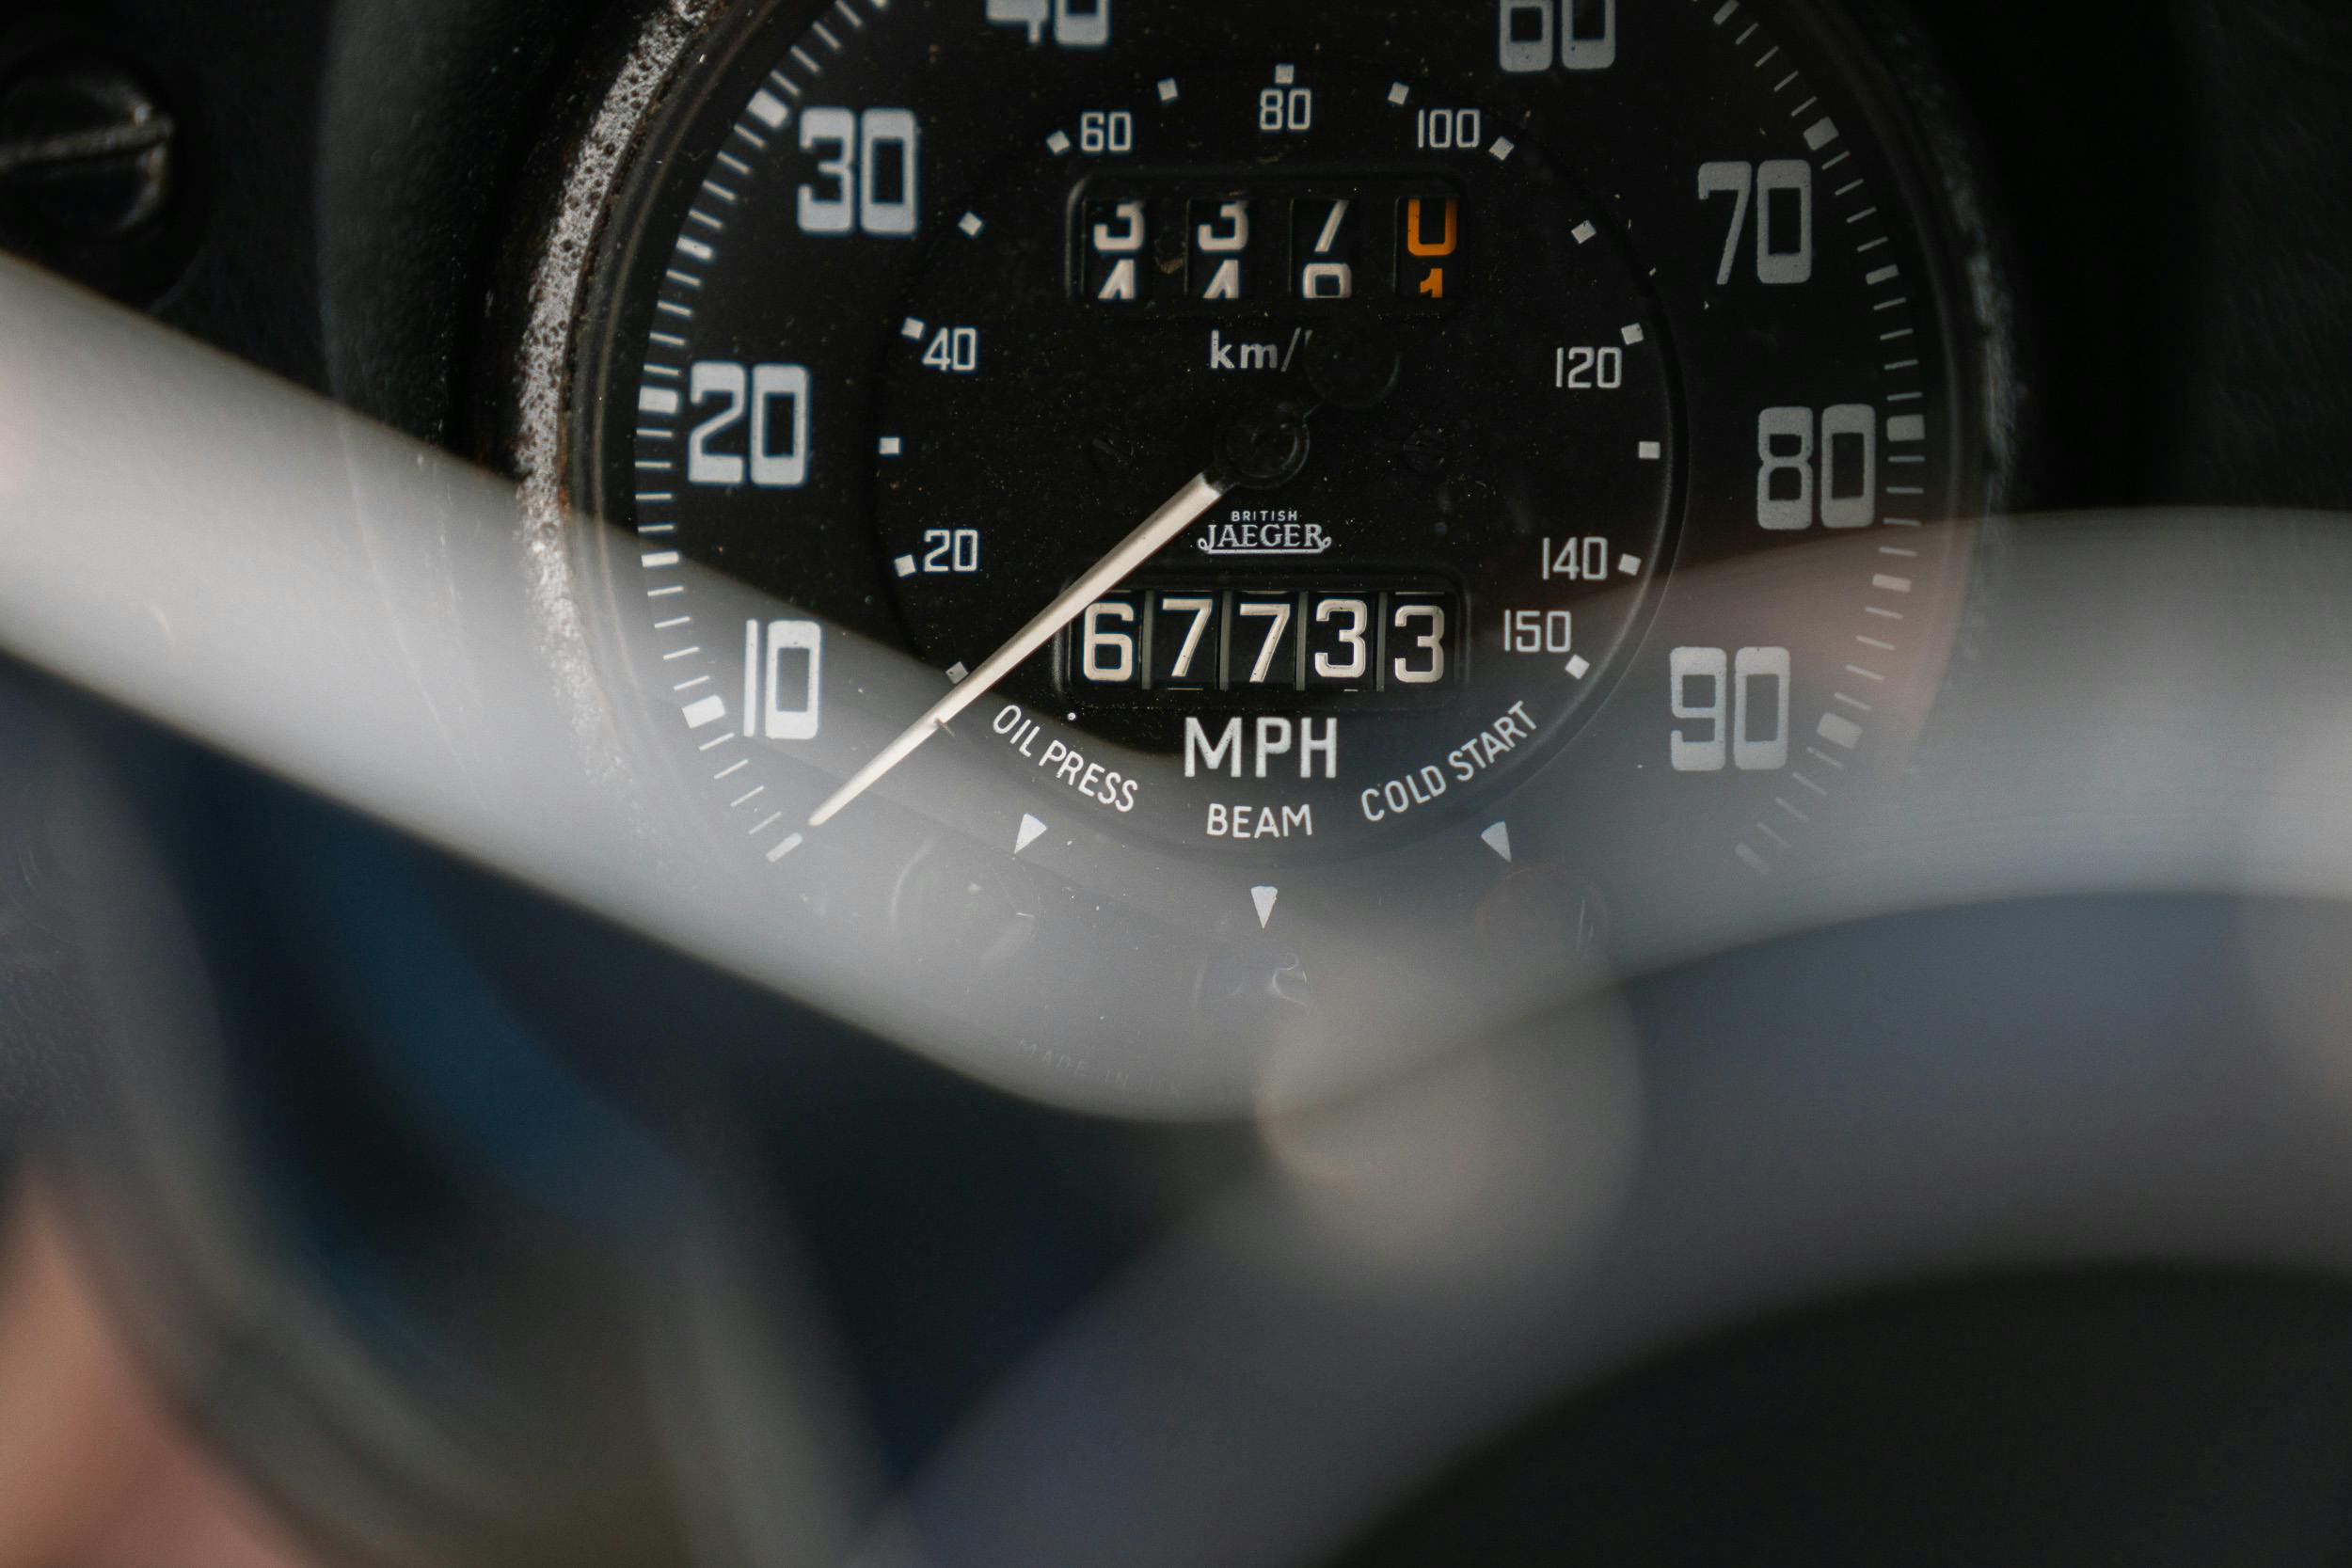 1982 Land Rover speedometer